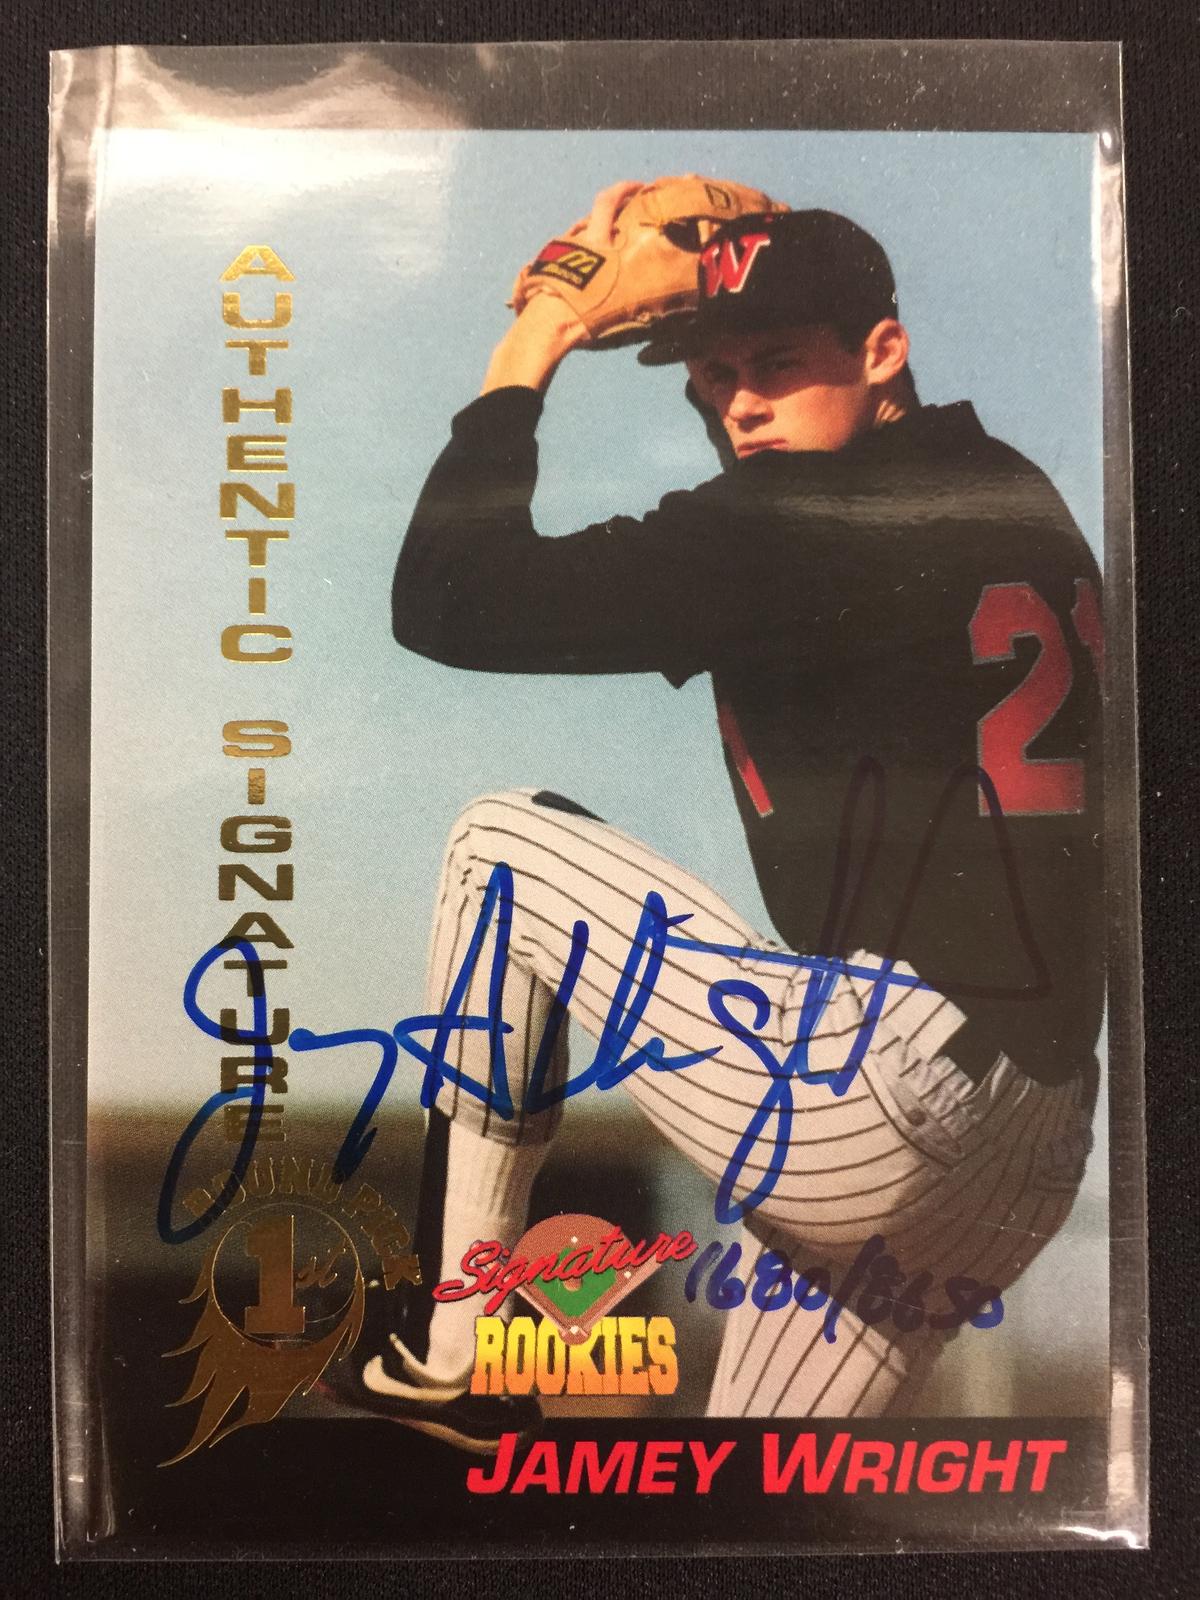 1994 Signature Rookies Jamey Wright Autograph Rookie Card /8650